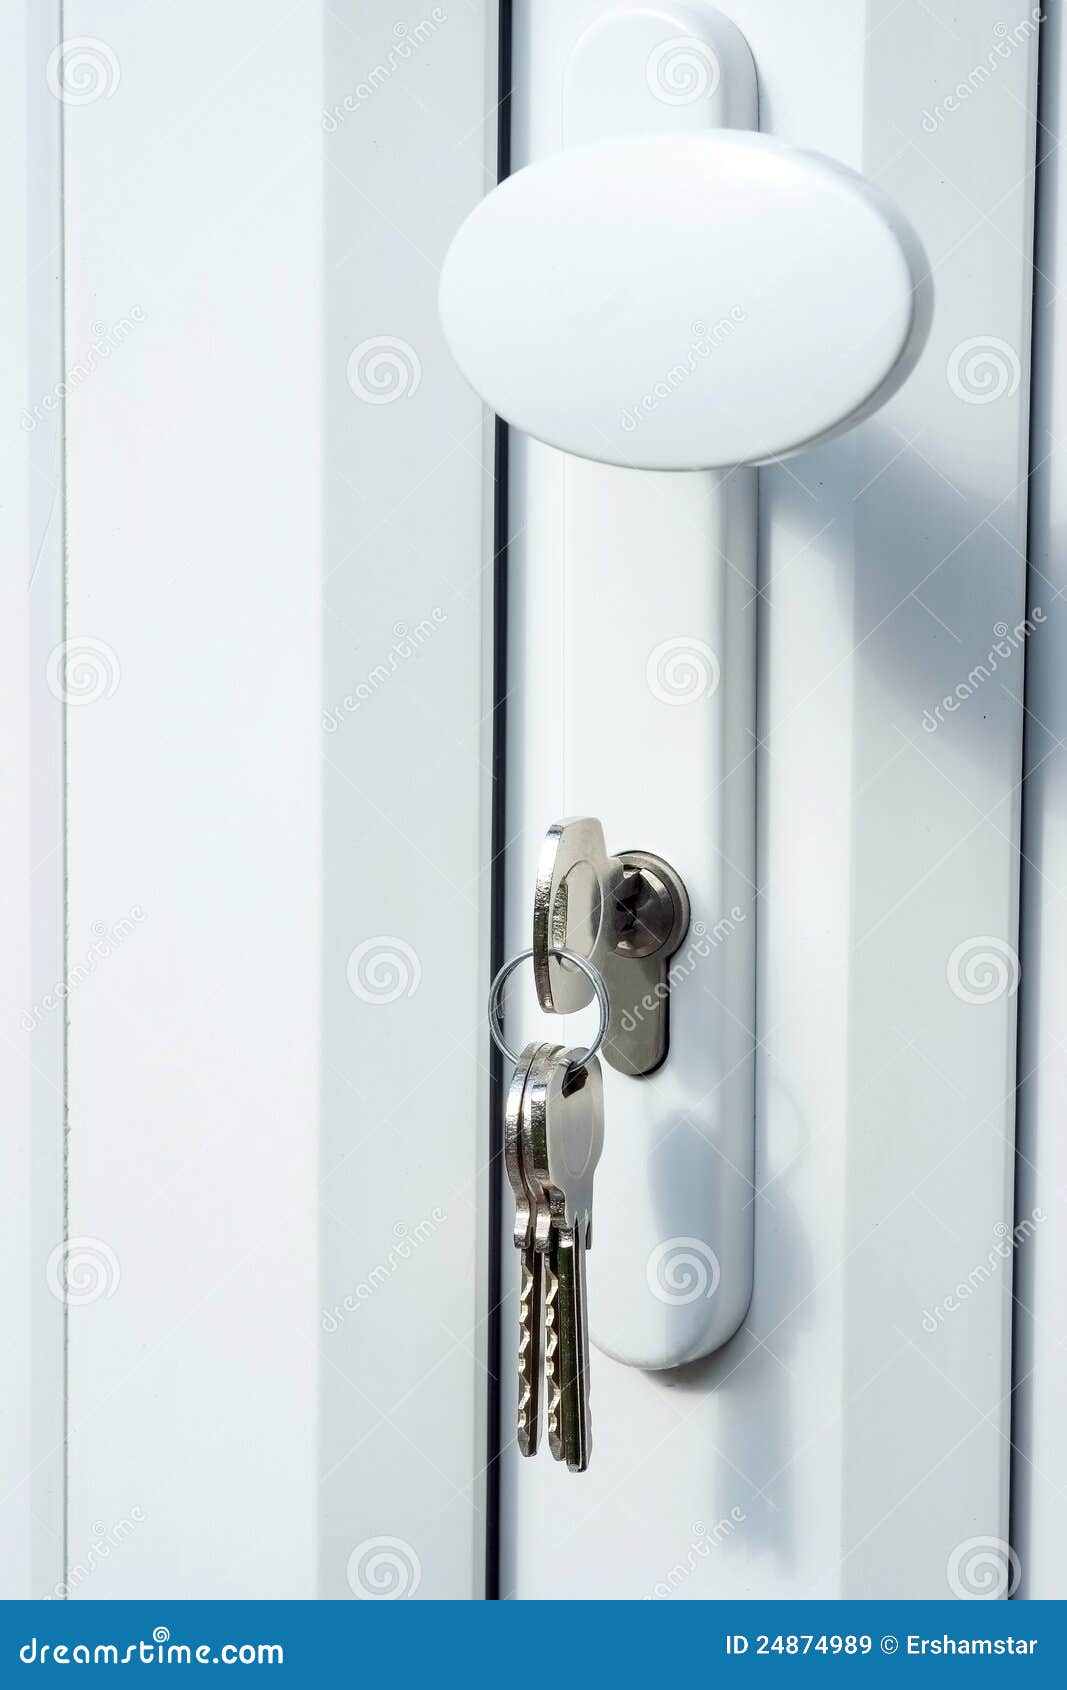 upvc double glazed door with keys in the lock